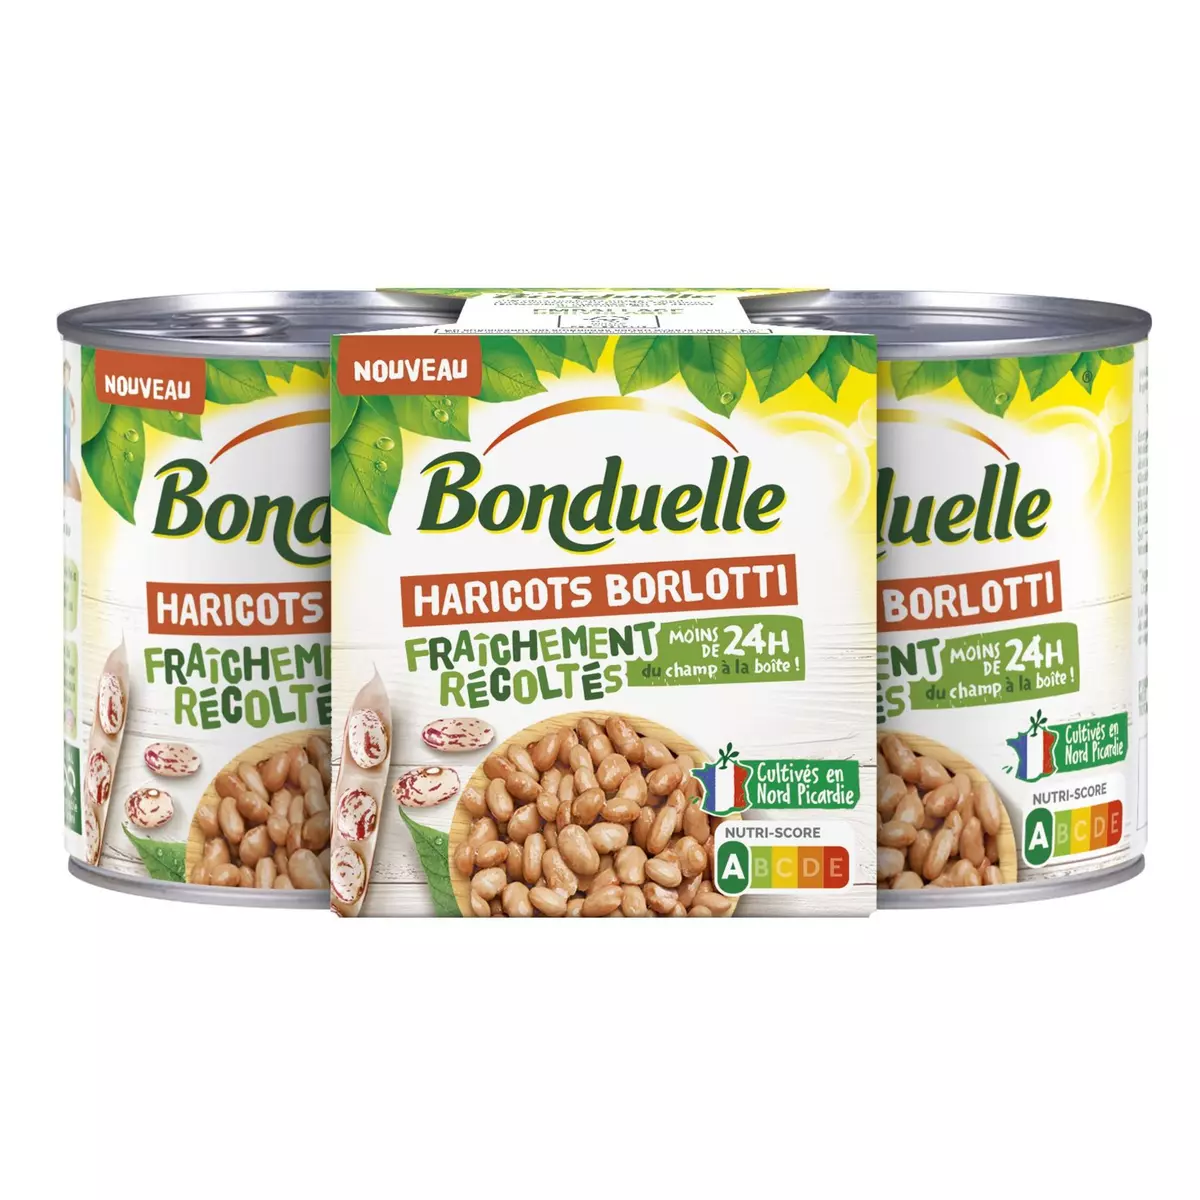 BONDUELLE Haricots Borlotti fraichement récoltés 250g